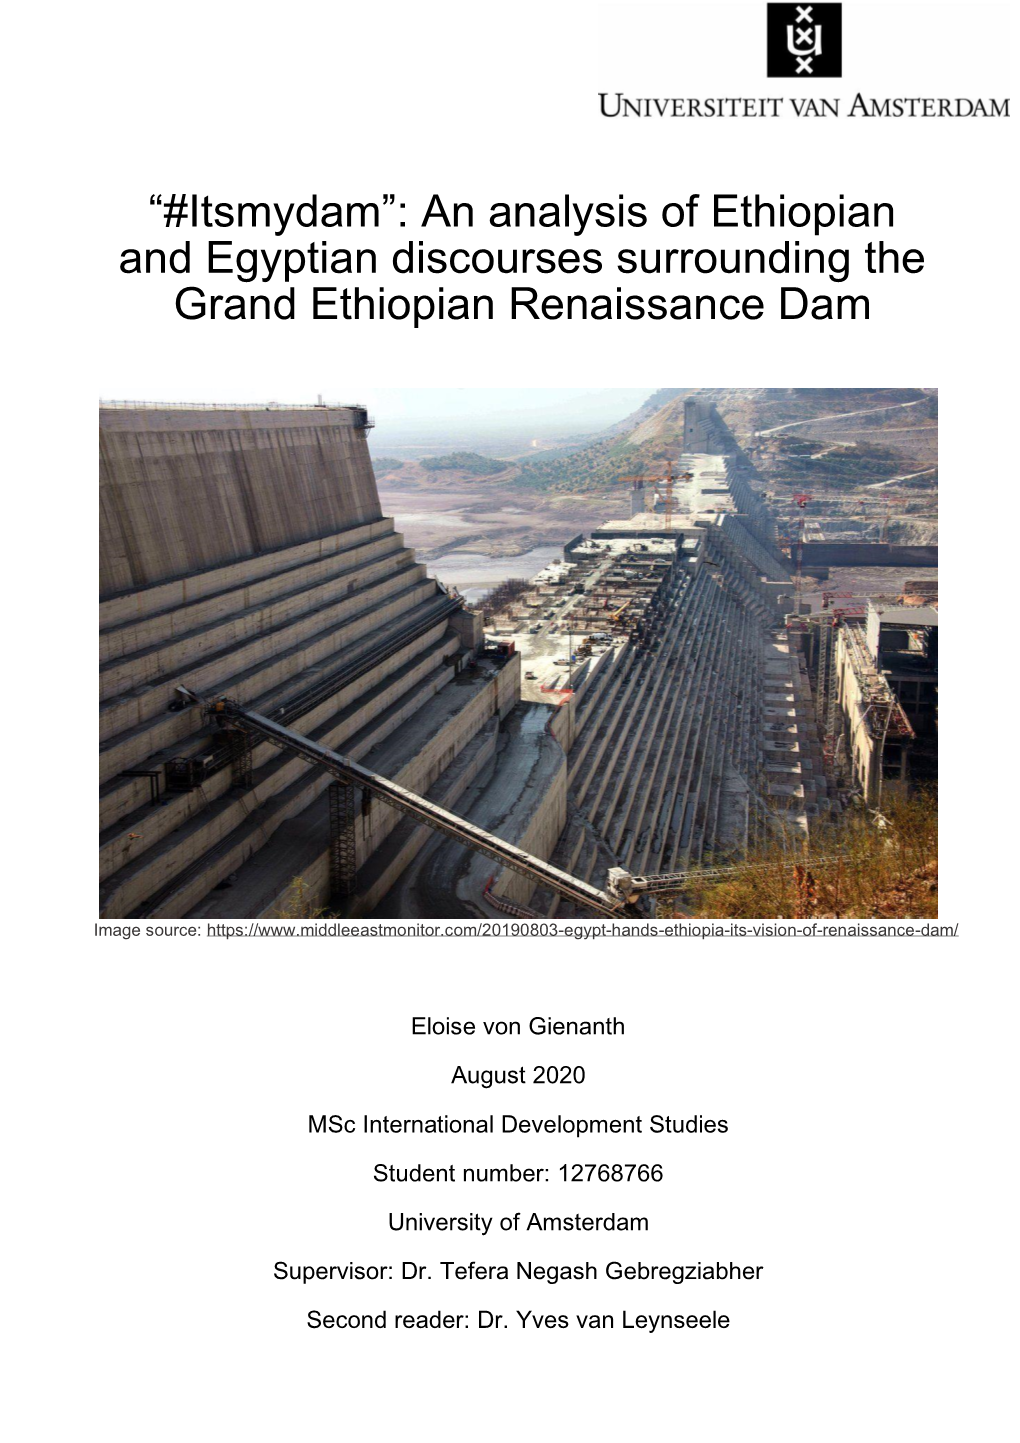 “#Itsmydam”: an Analysis of Ethiopian and Egyptian Discourses Surrounding the Grand Ethiopian Renaissance Dam